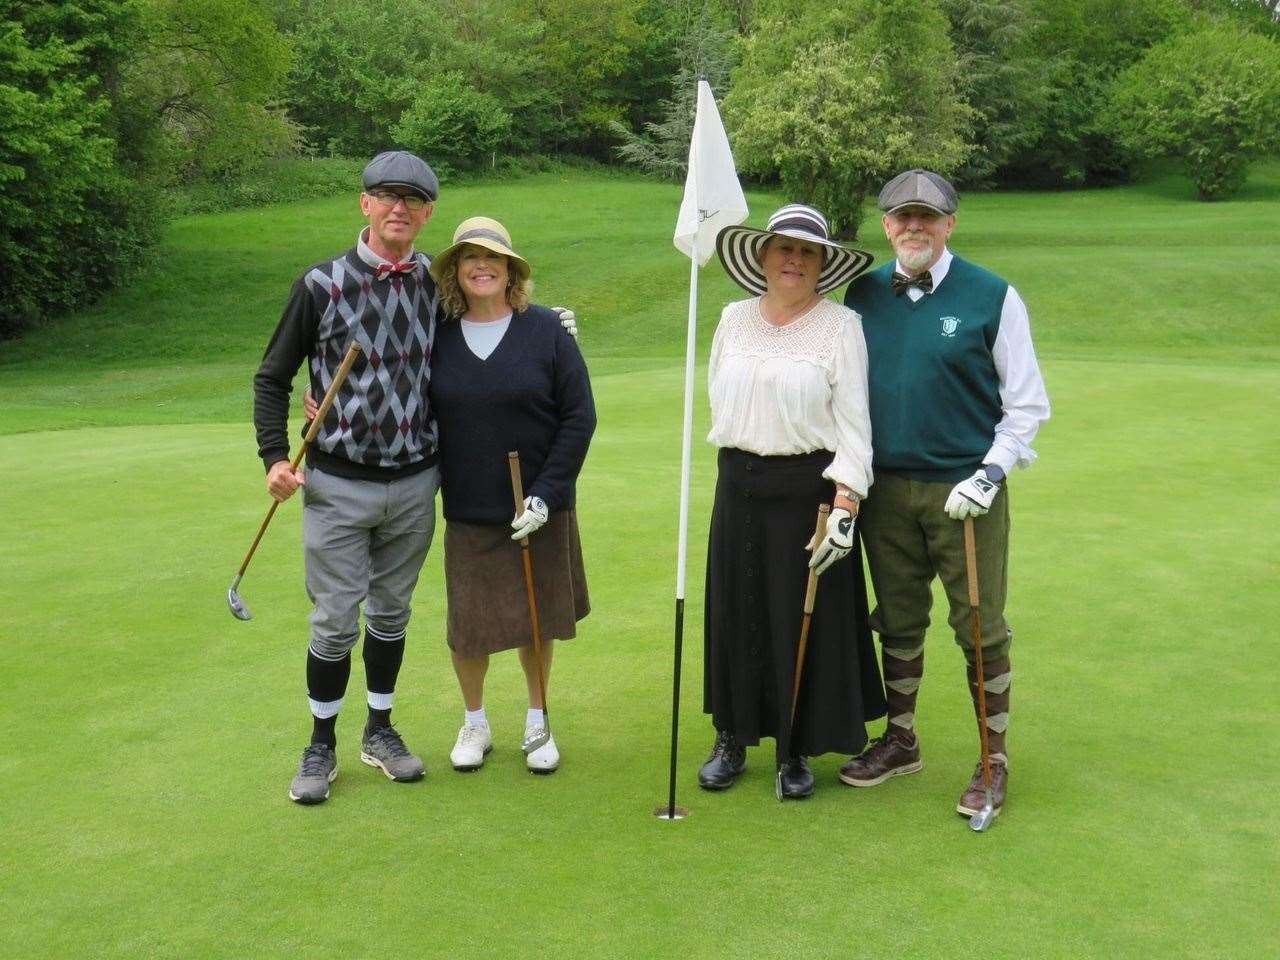 Club members celebrated 125 years of golf